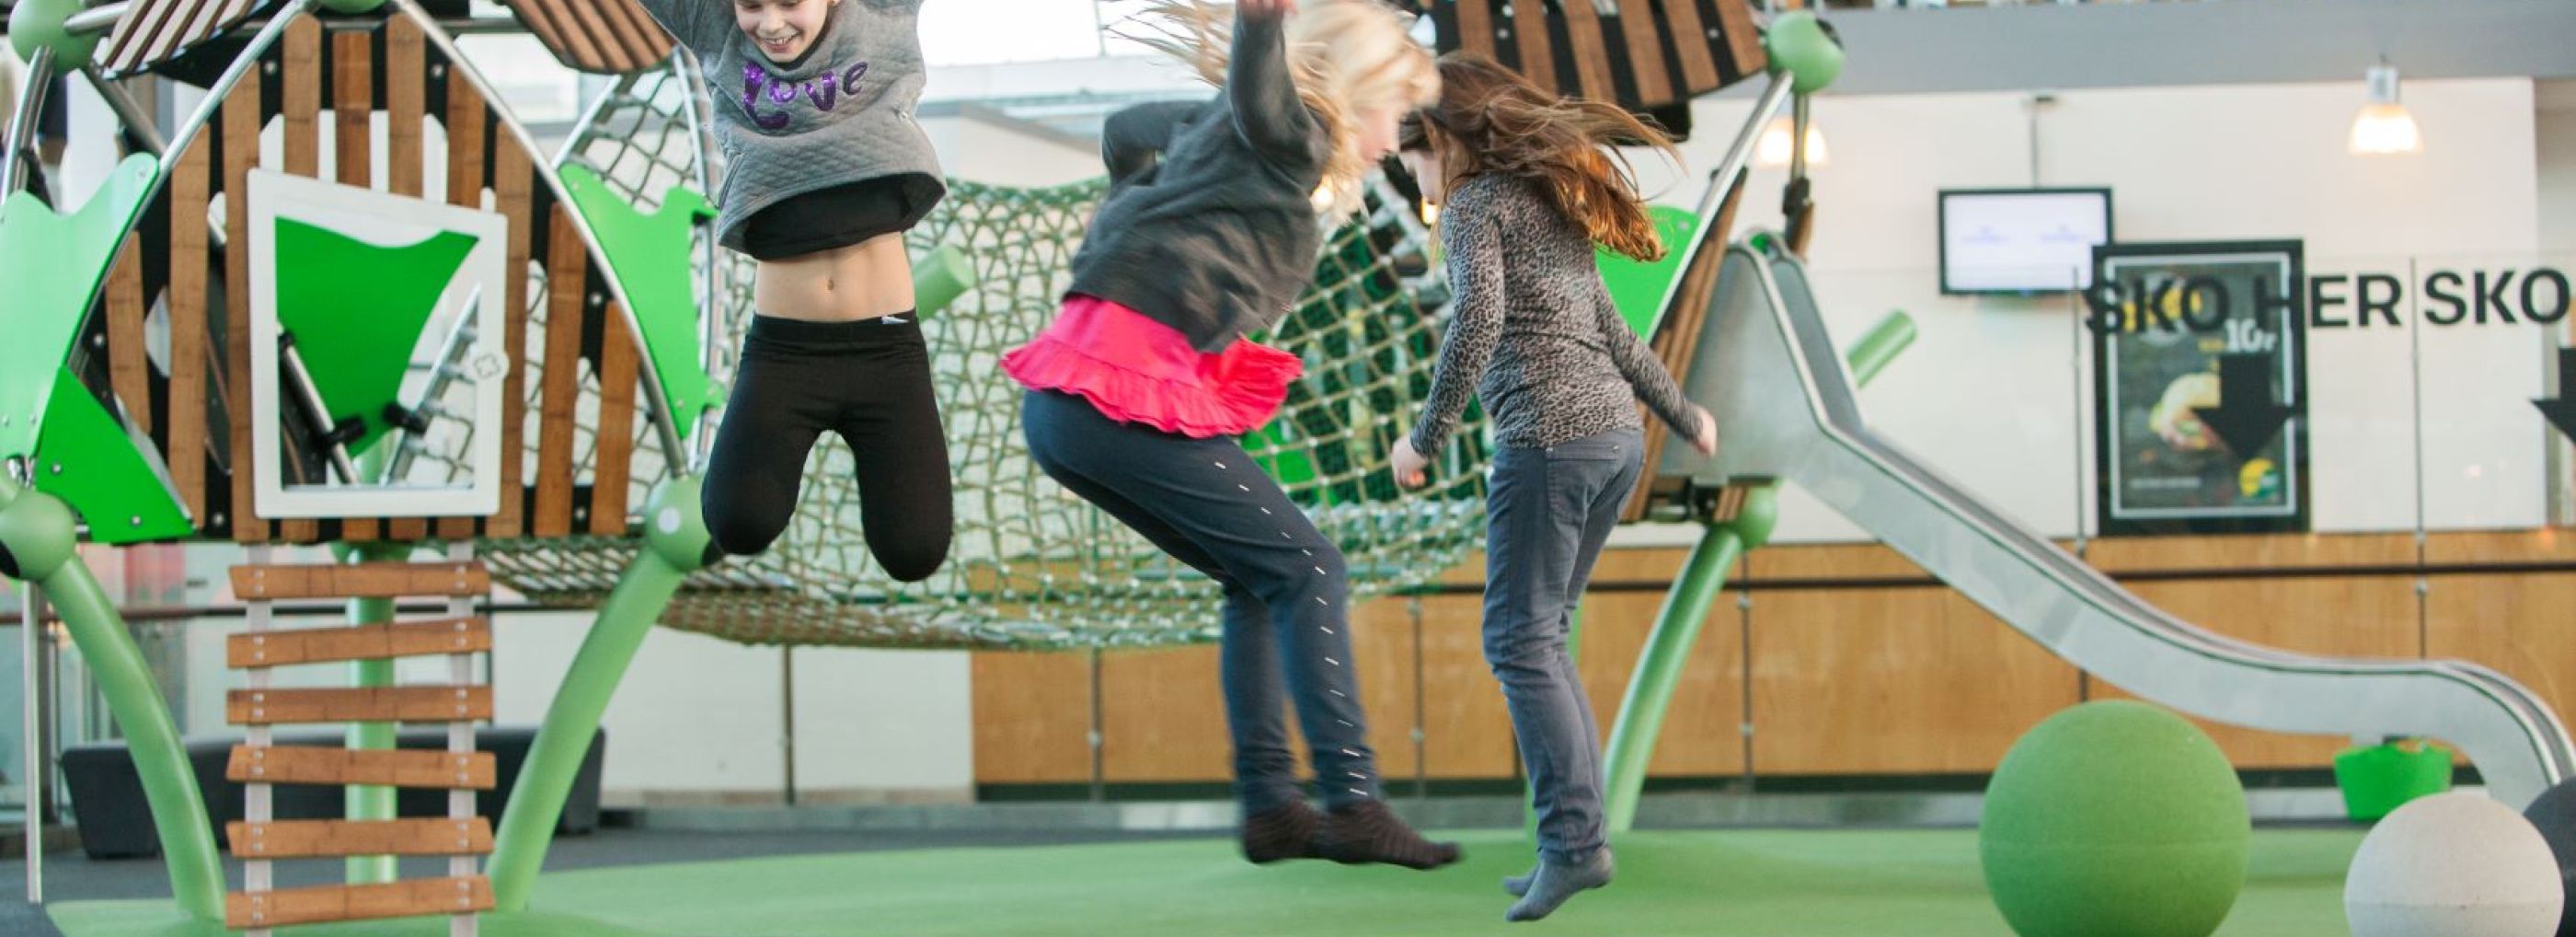 Three girls jumping on an indoor rubber floor playground.